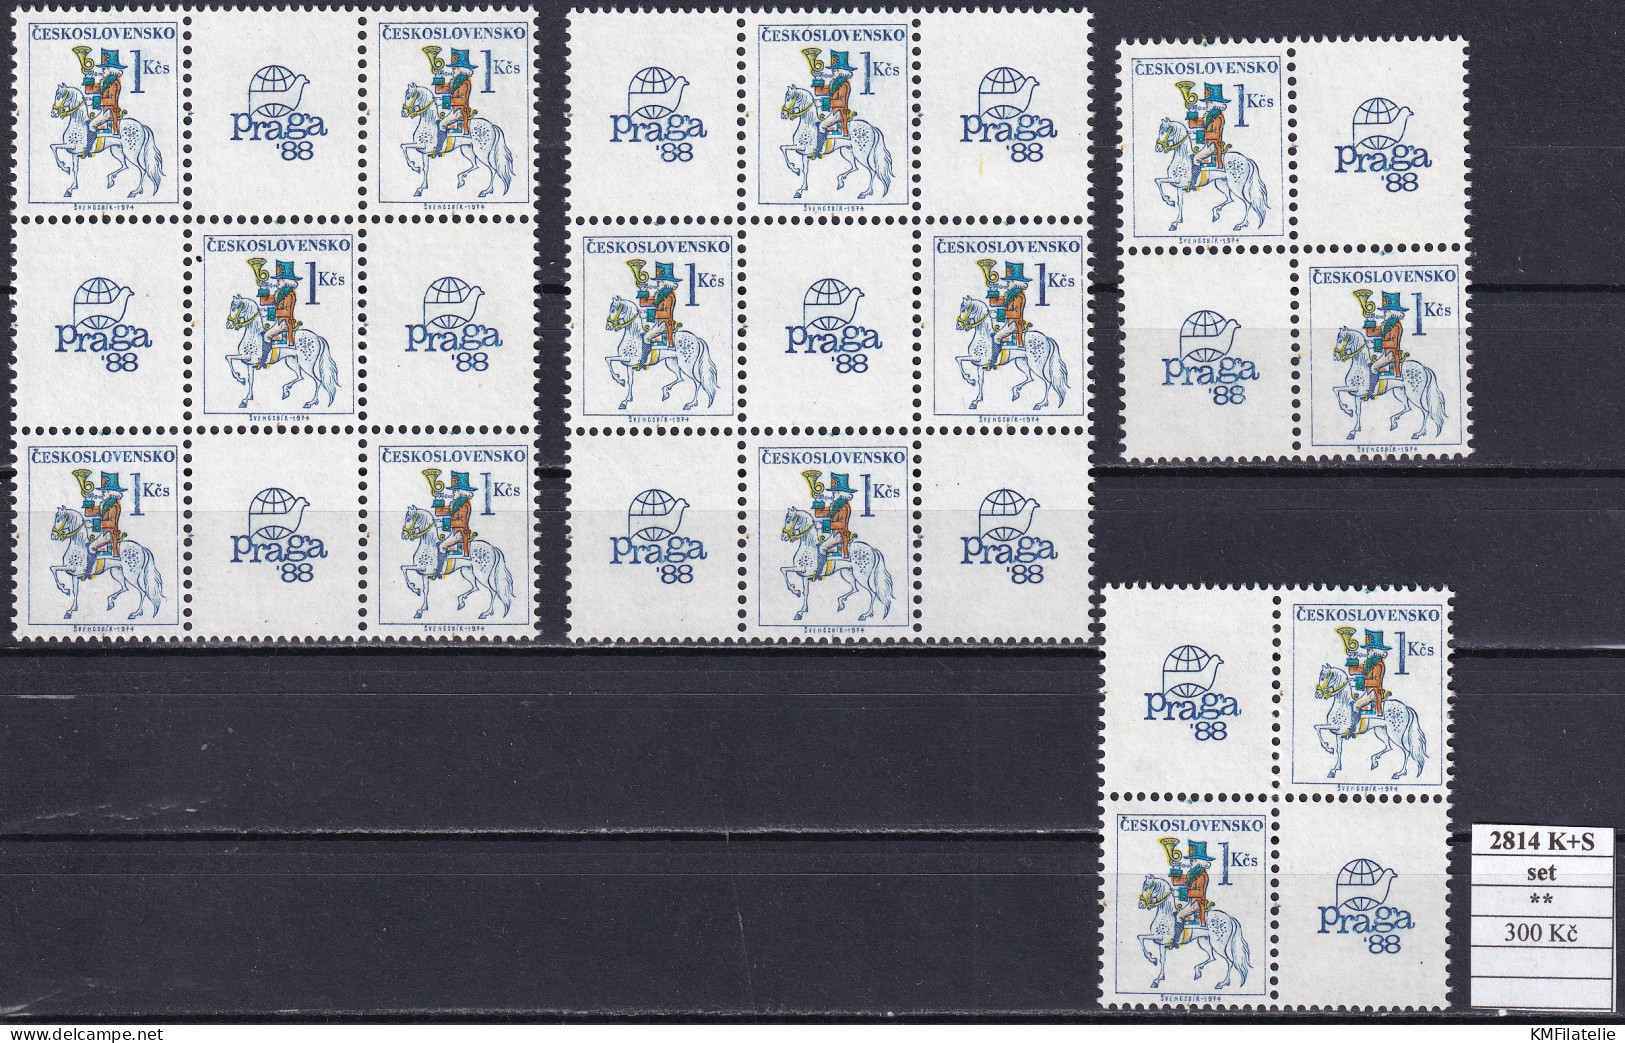 Czechoslovakia Pofis 2814 K + S Set MNH - Unused Stamps